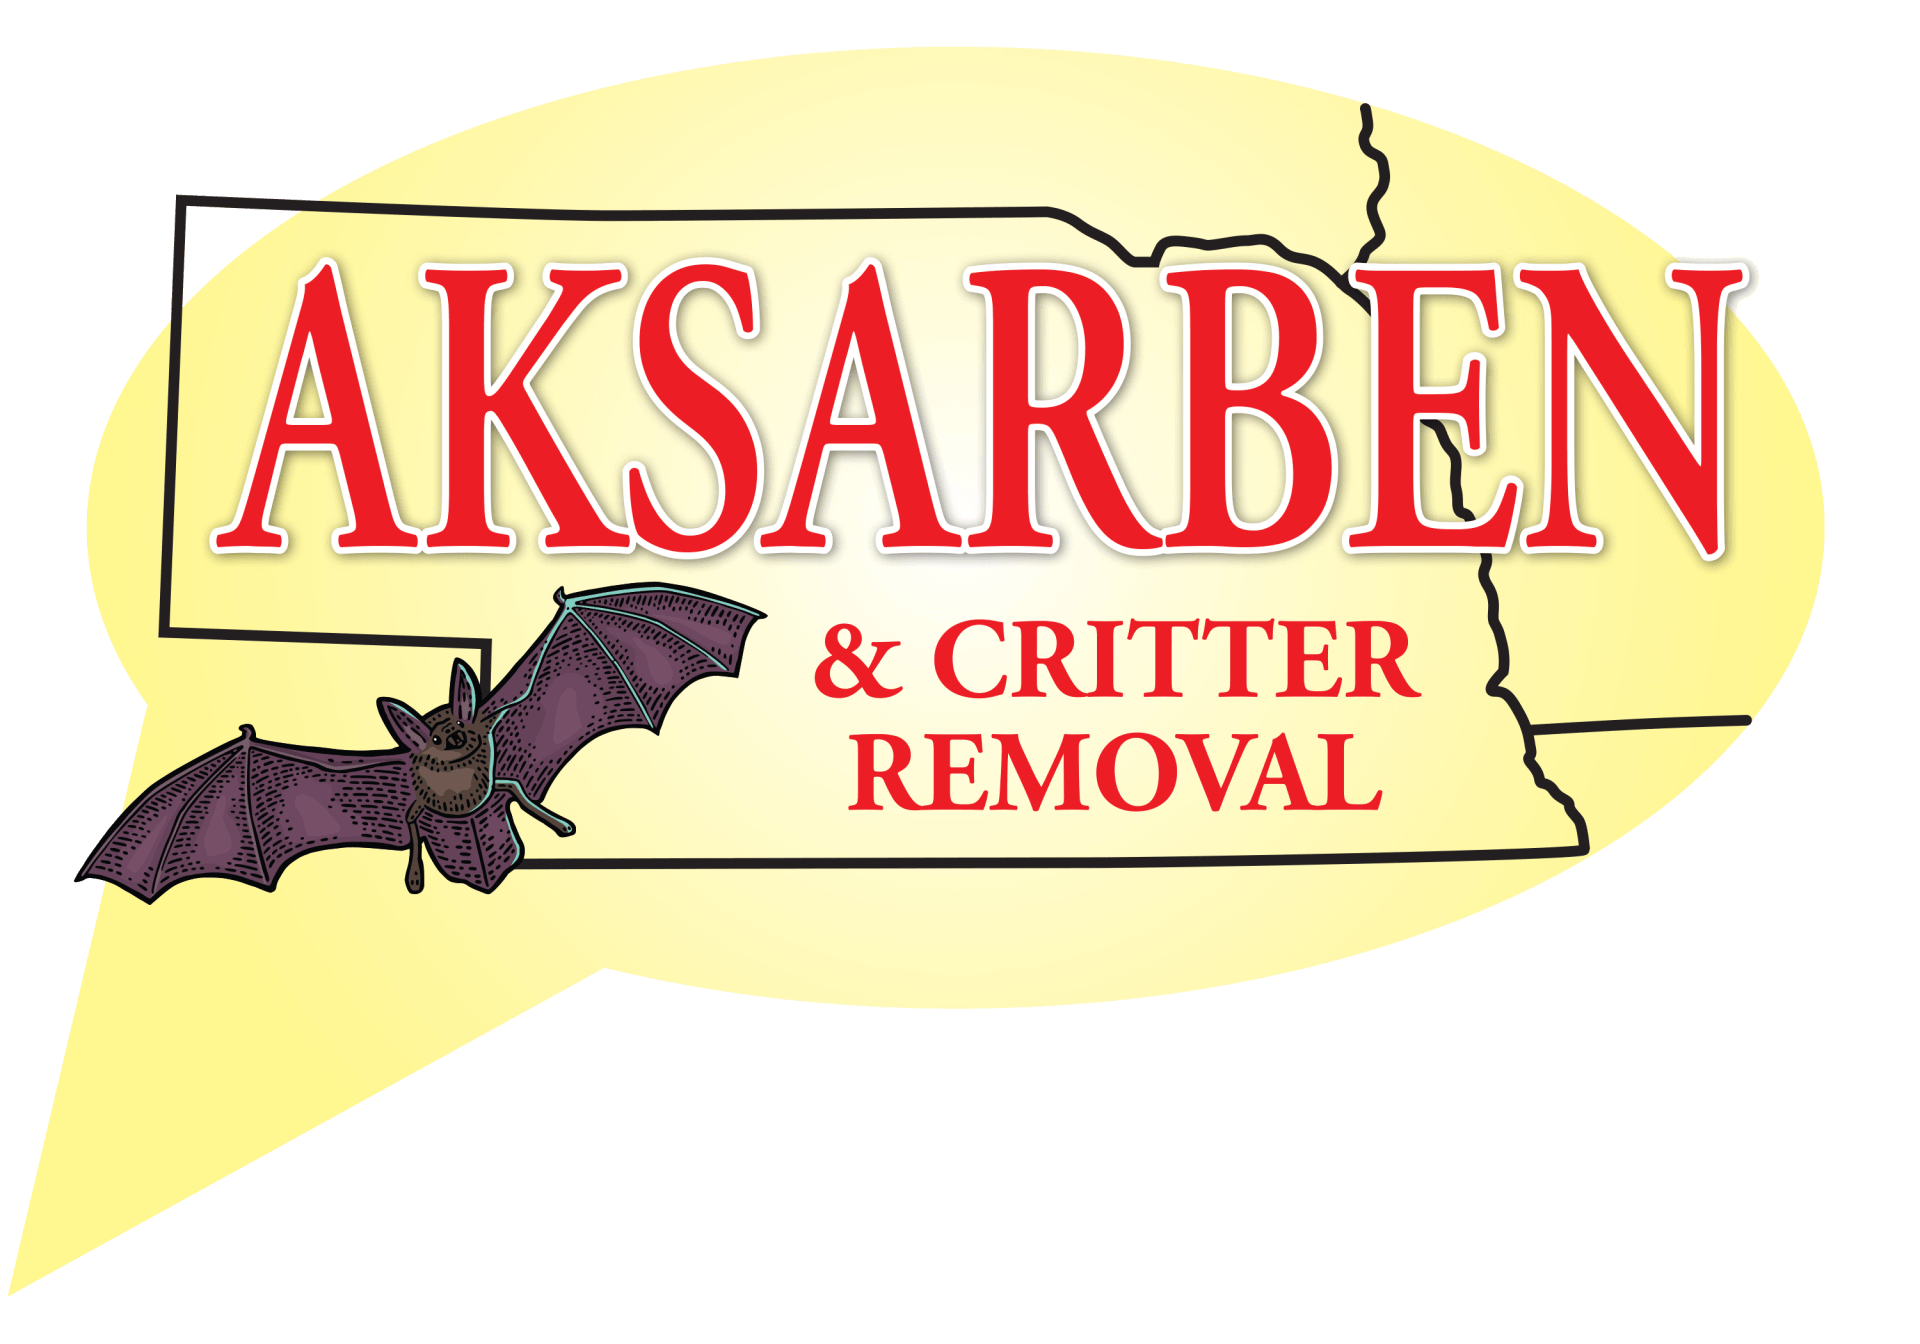 Aksarben Bat & Critter Removal - Logo